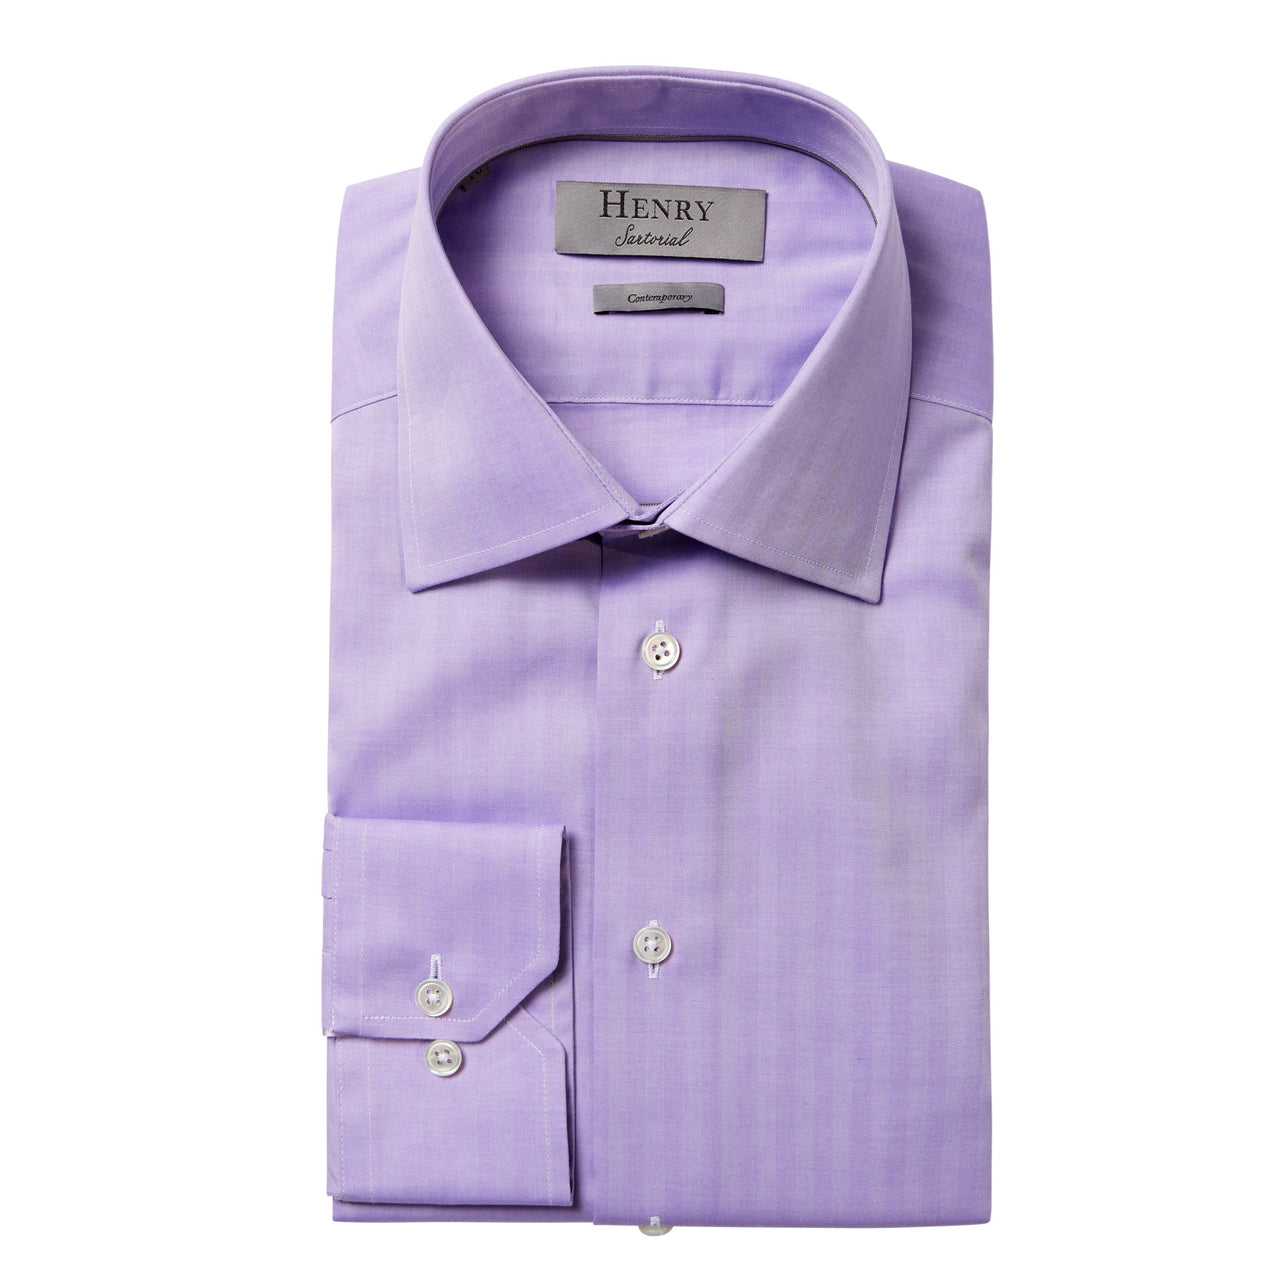 HENRY SARTORIAL Plain Twill Business Shirt Single Cuff Contemporary Fit PURPLE